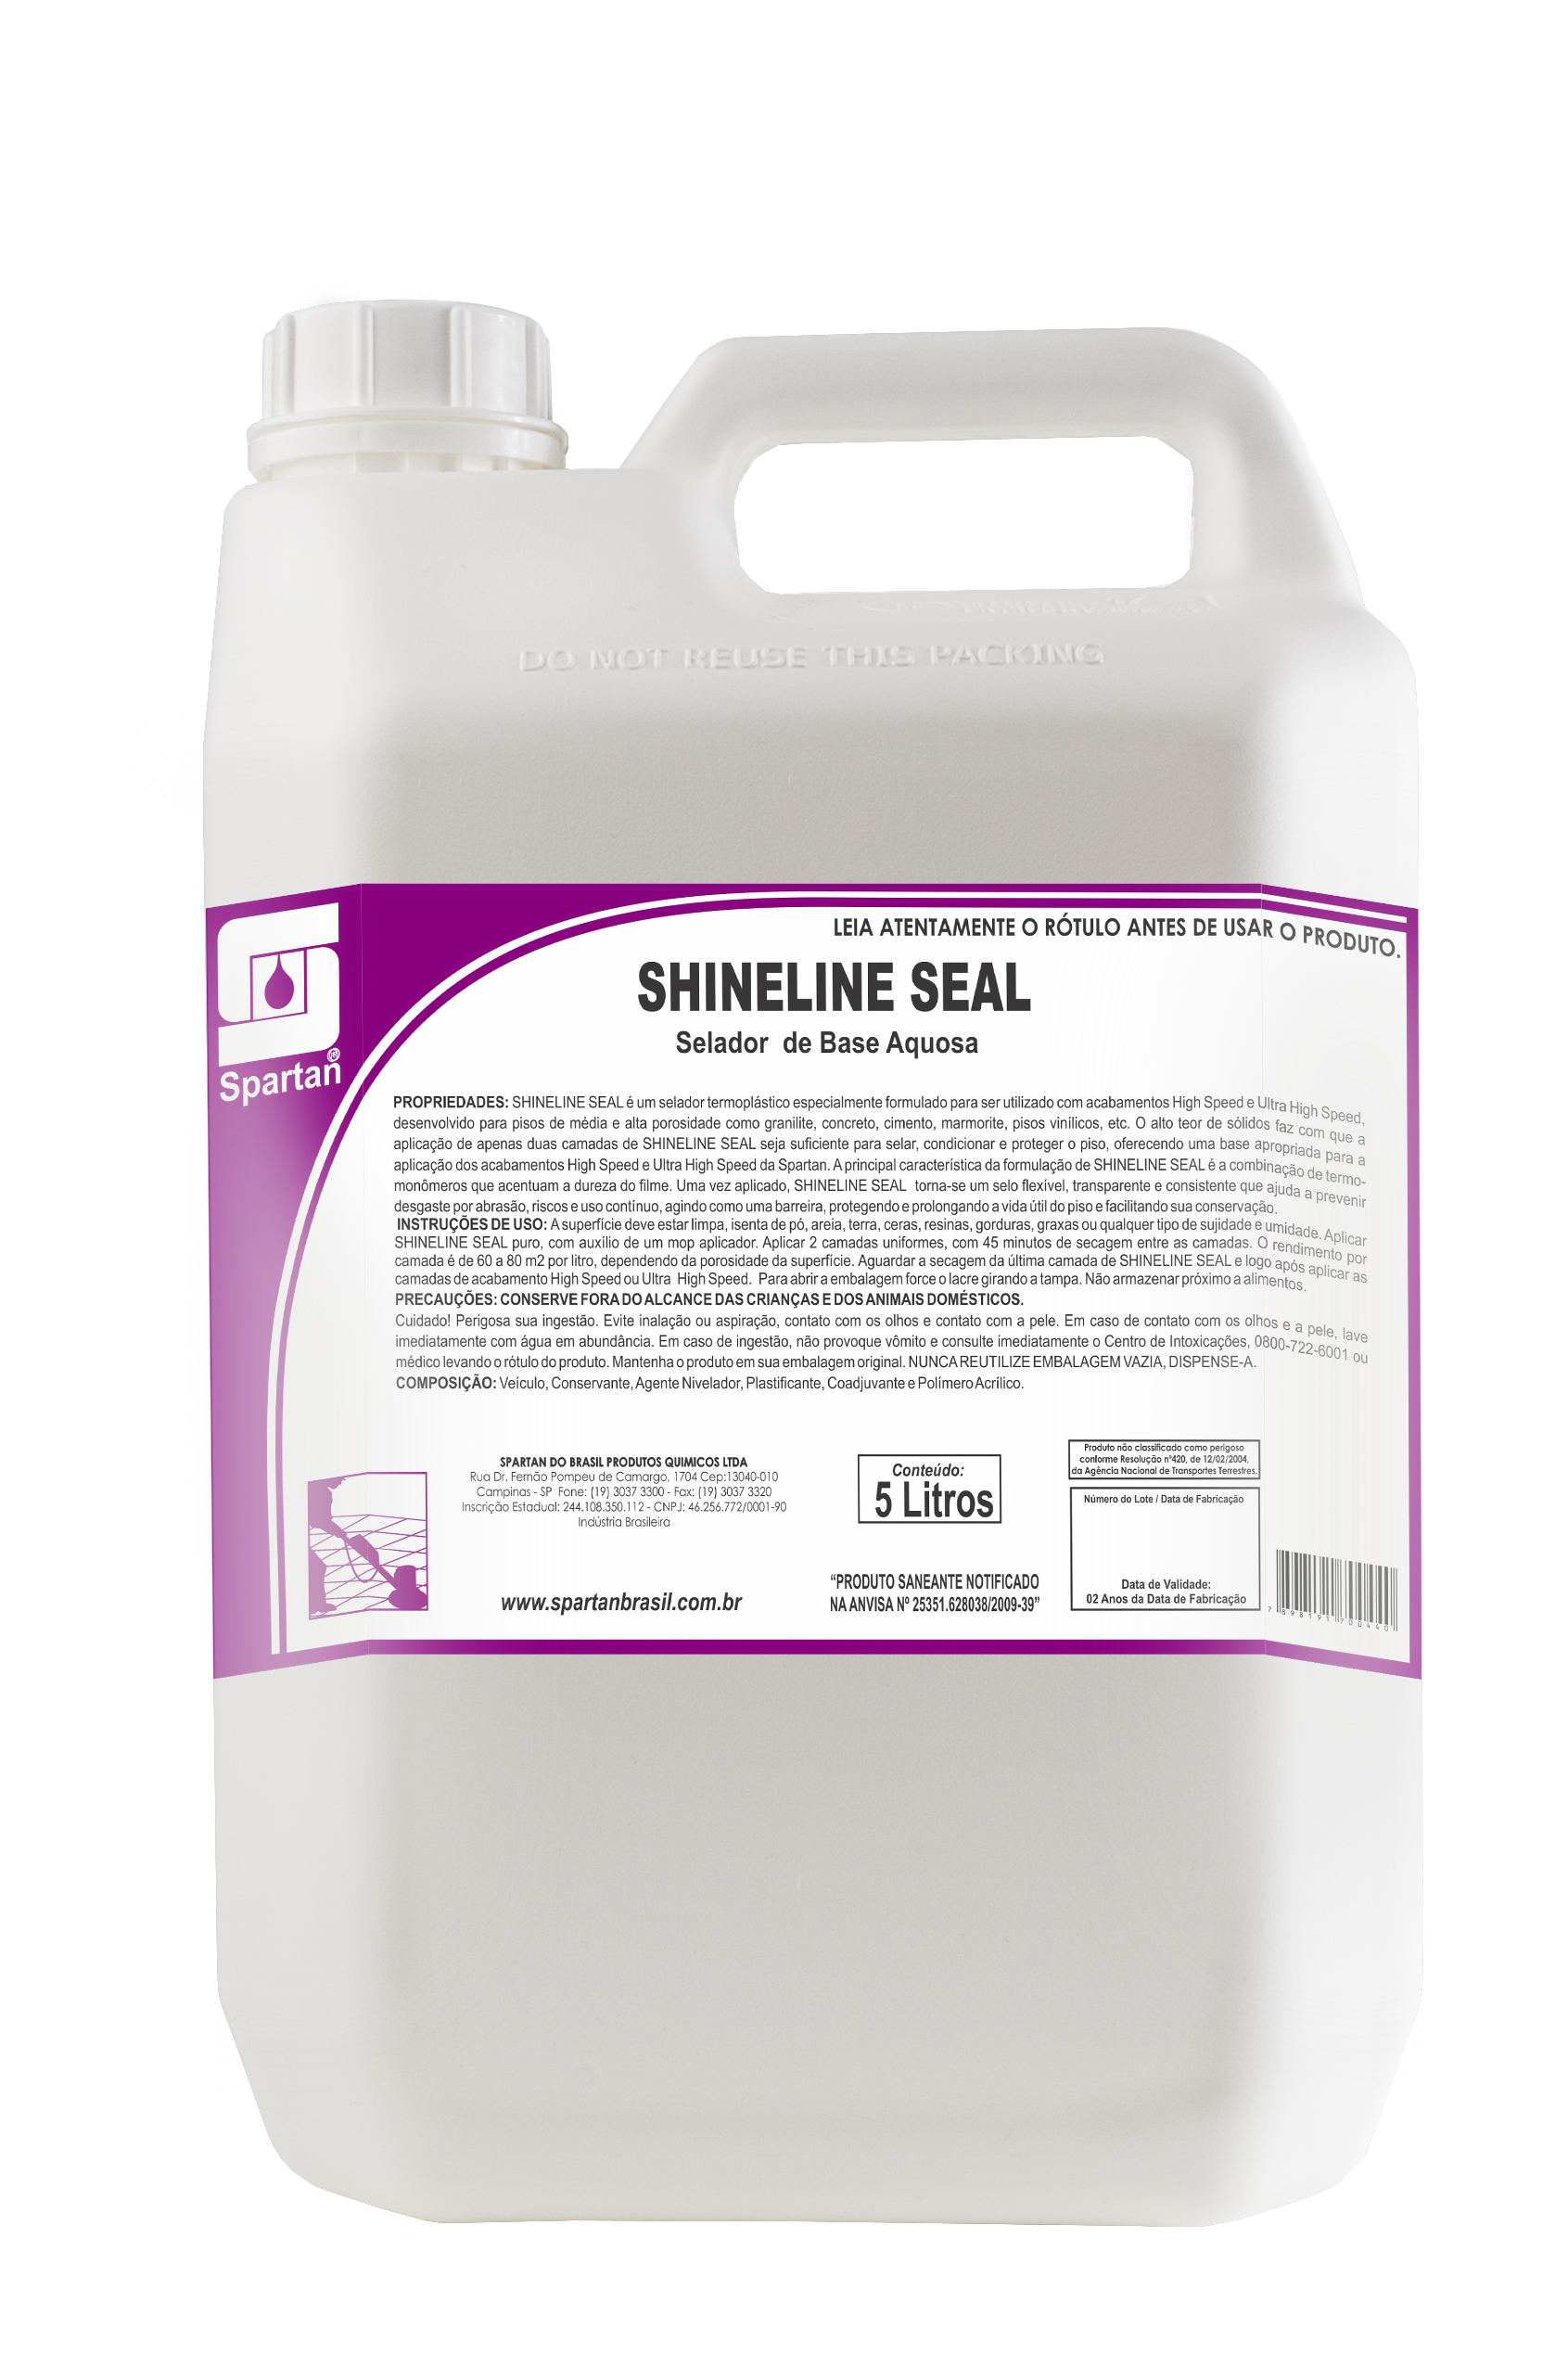 Shineline Seal